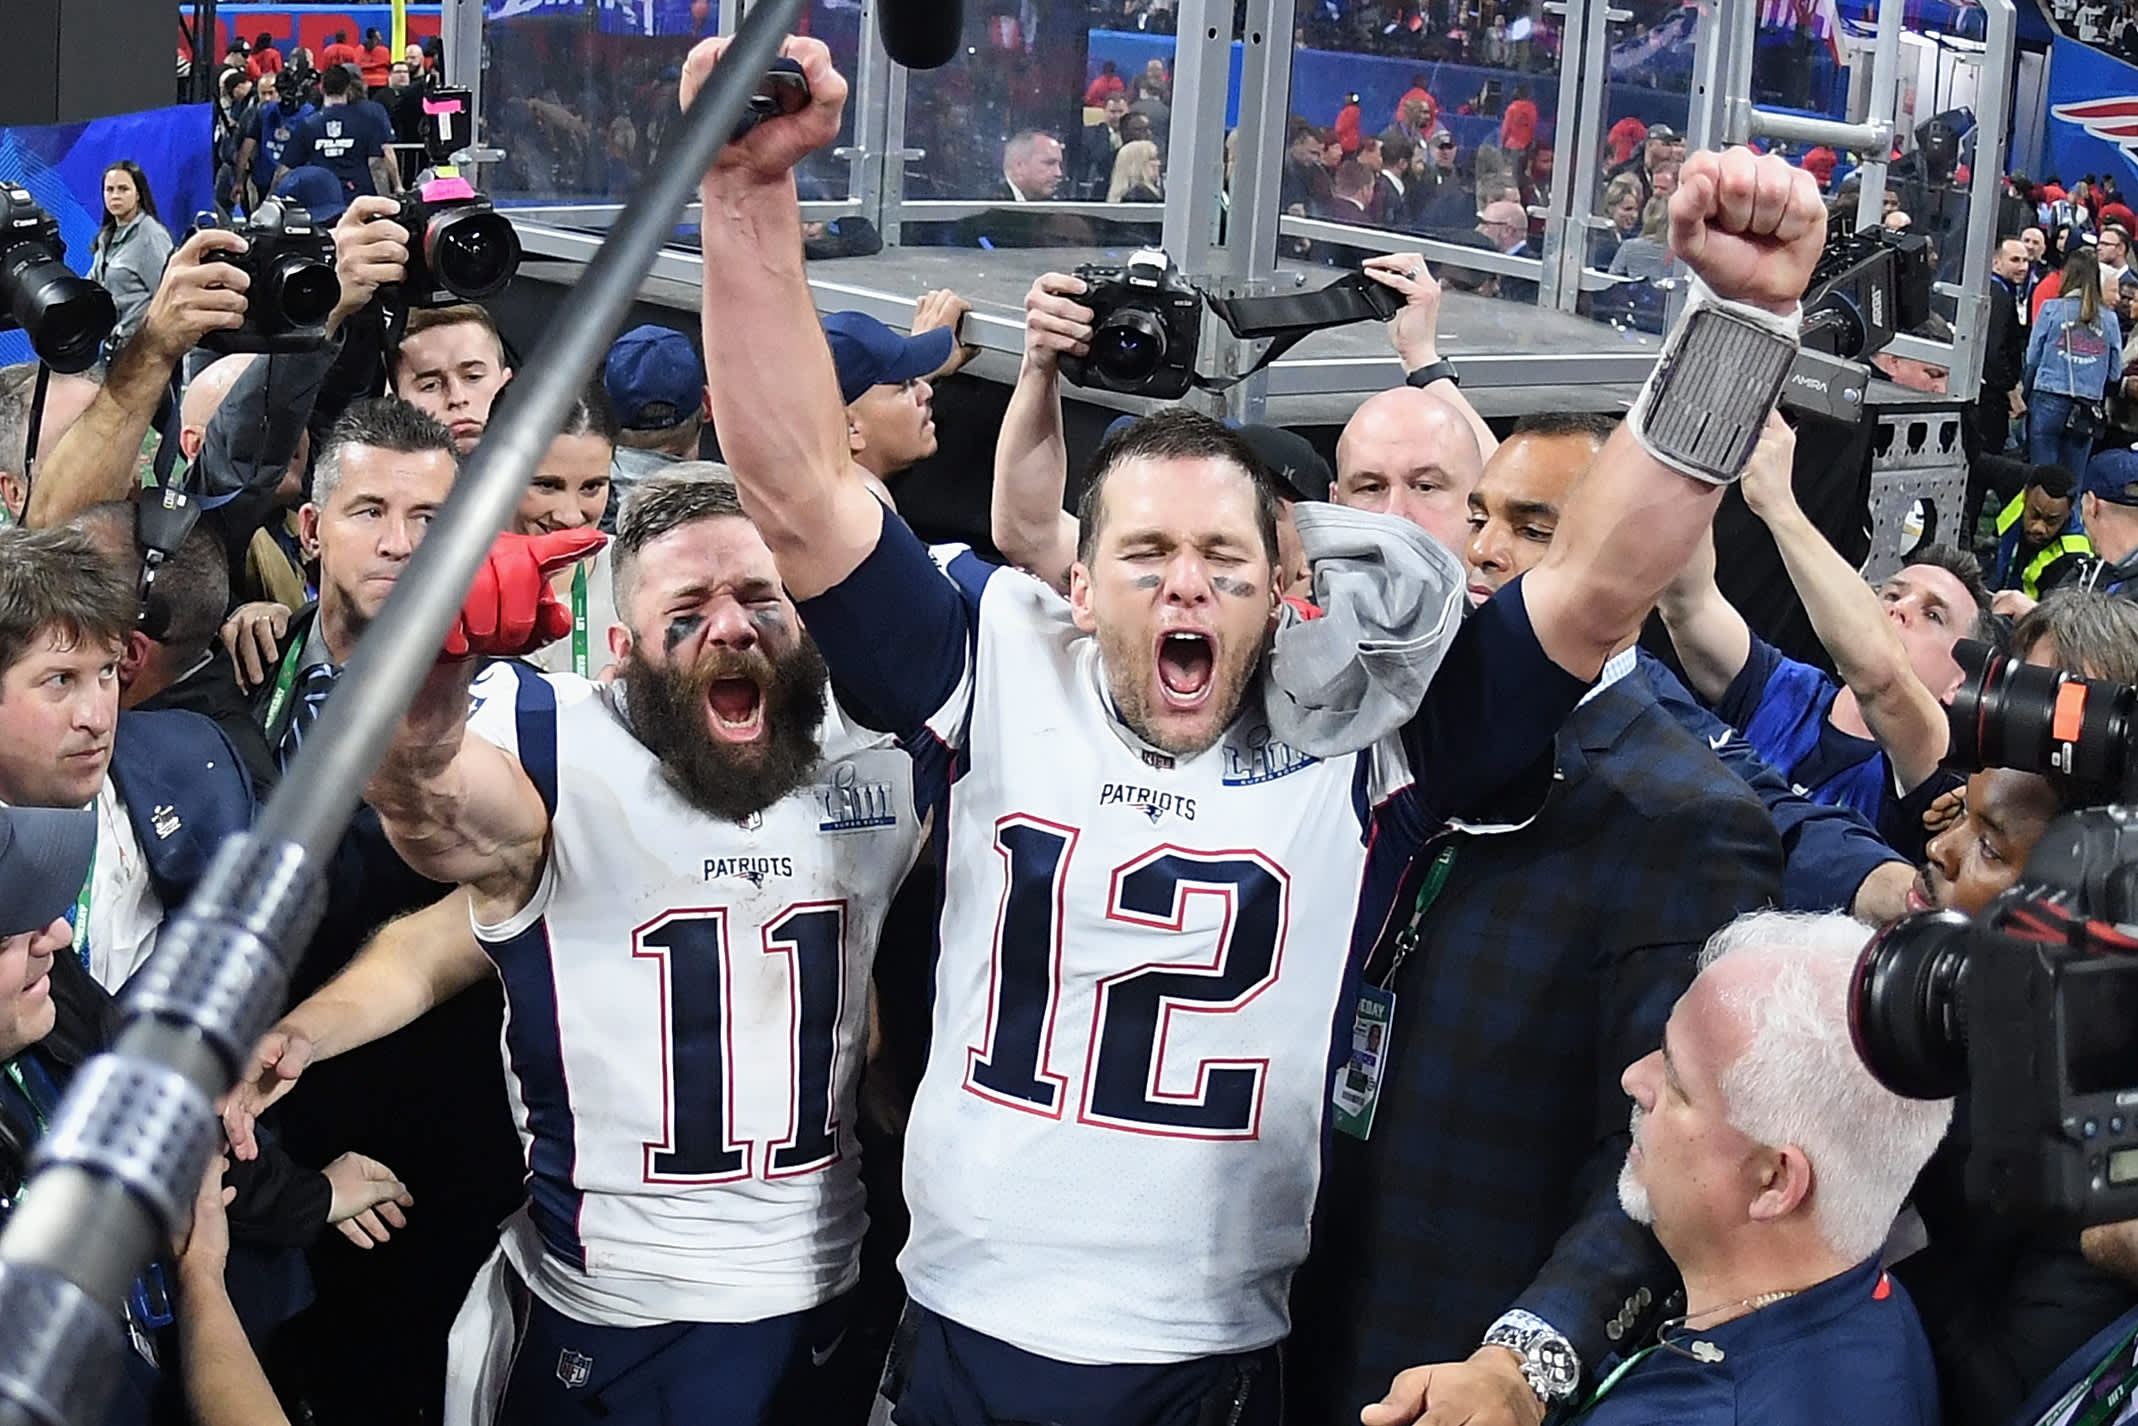 Believe New England Patriots Super Bowl 2019 Sweatshirt 